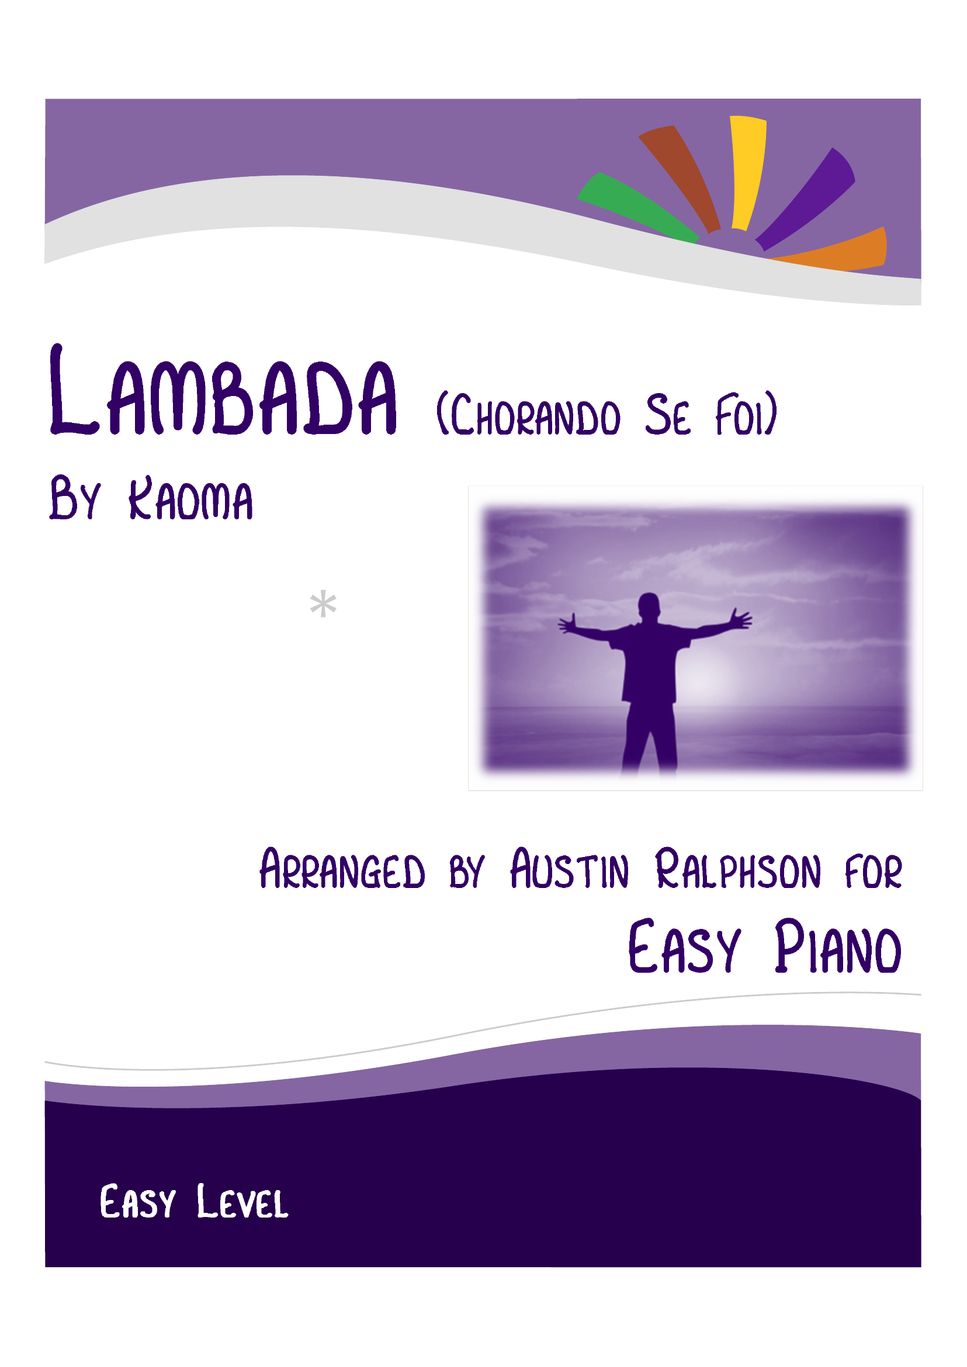 Kaoma - Chorando Se Foi (Lambada) - easy piano by Austin Ralphson